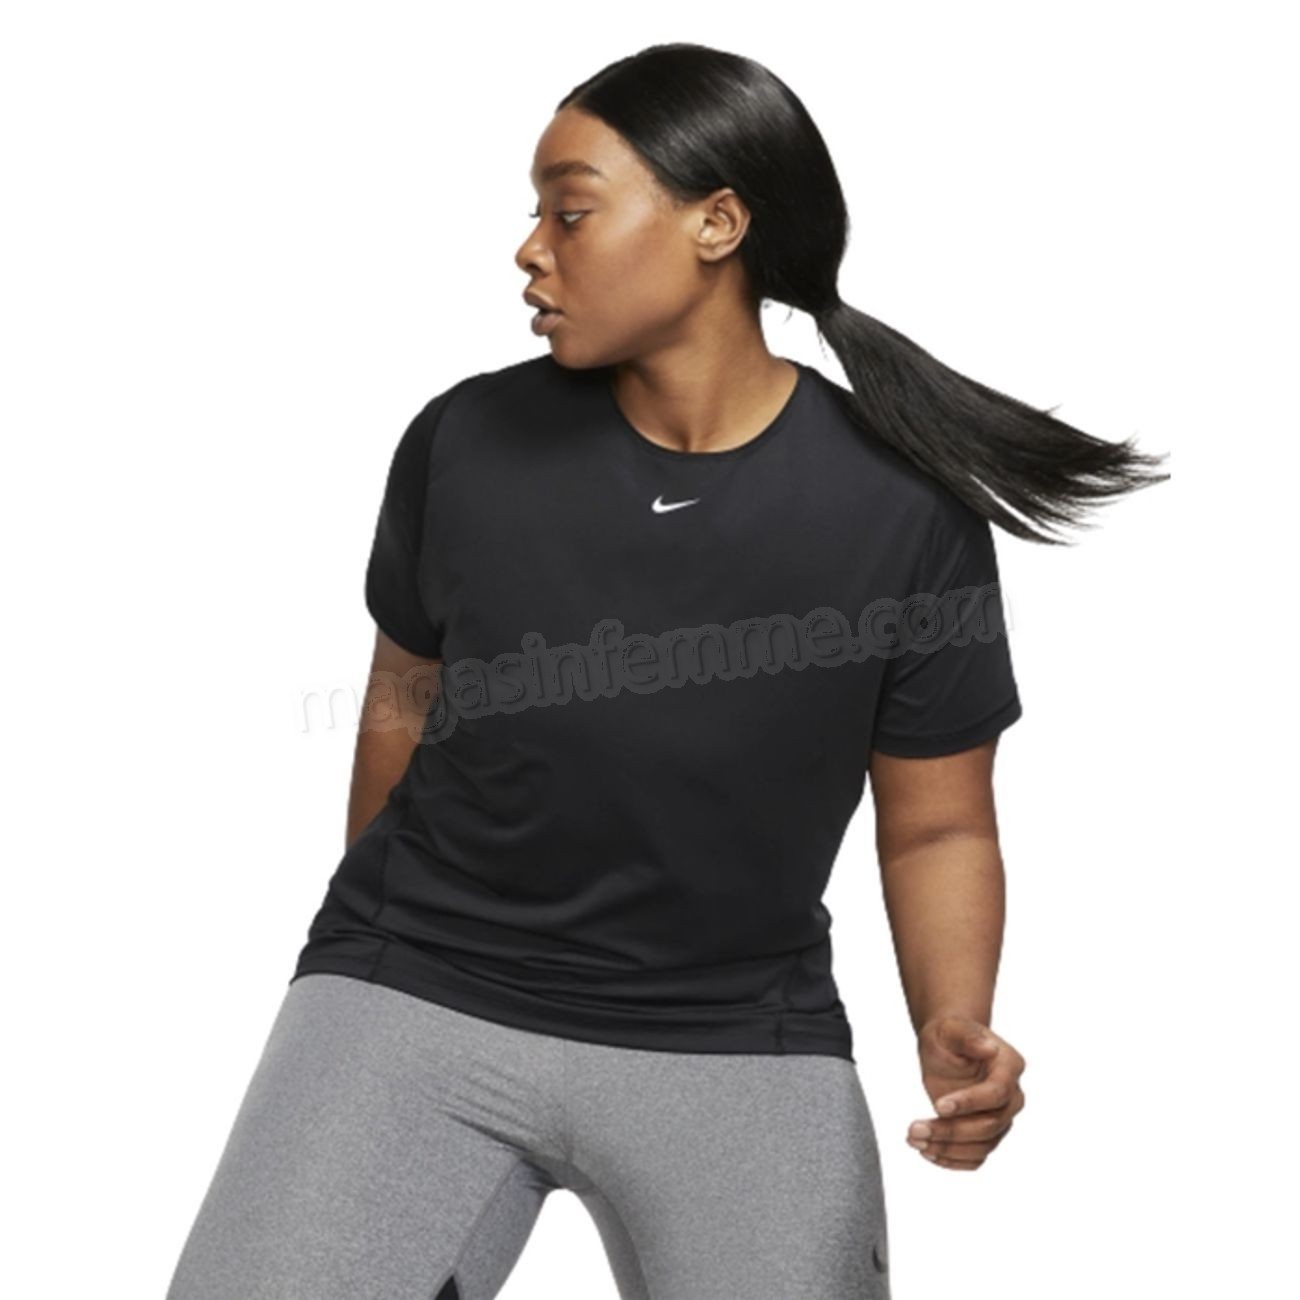 Nike-TEE-SHIRT femme NIKE Nike Pro (grande taille) en solde - Nike-TEE-SHIRT femme NIKE Nike Pro (grande taille) en solde